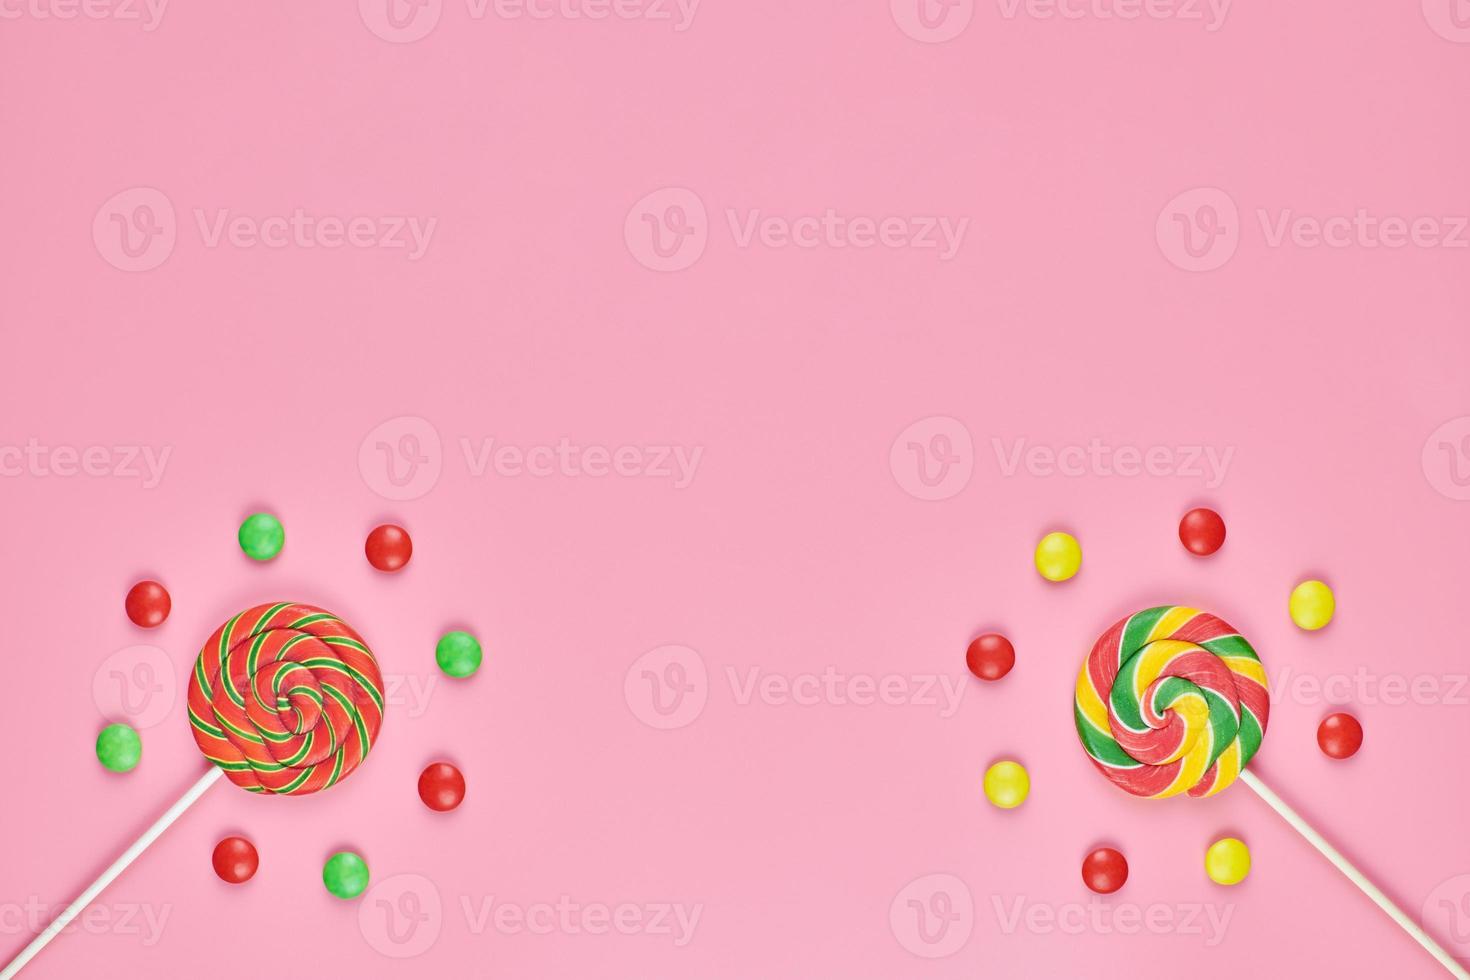 zoet lolly en snoep Aan roze achtergrond foto